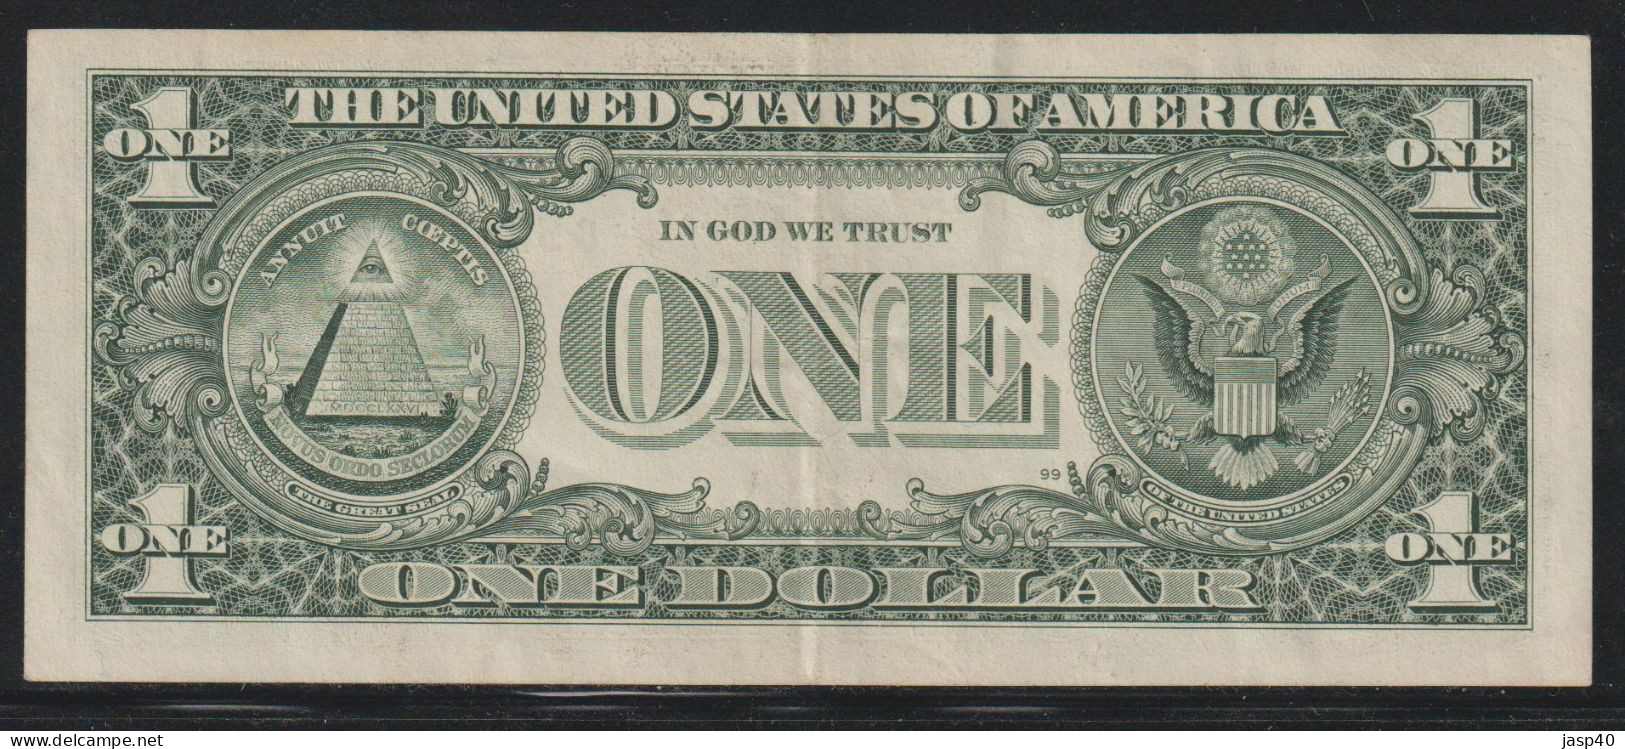 ESTADOS UNIDOS - 1 DOLAR DE 1988 - United States Notes (1928-1953)